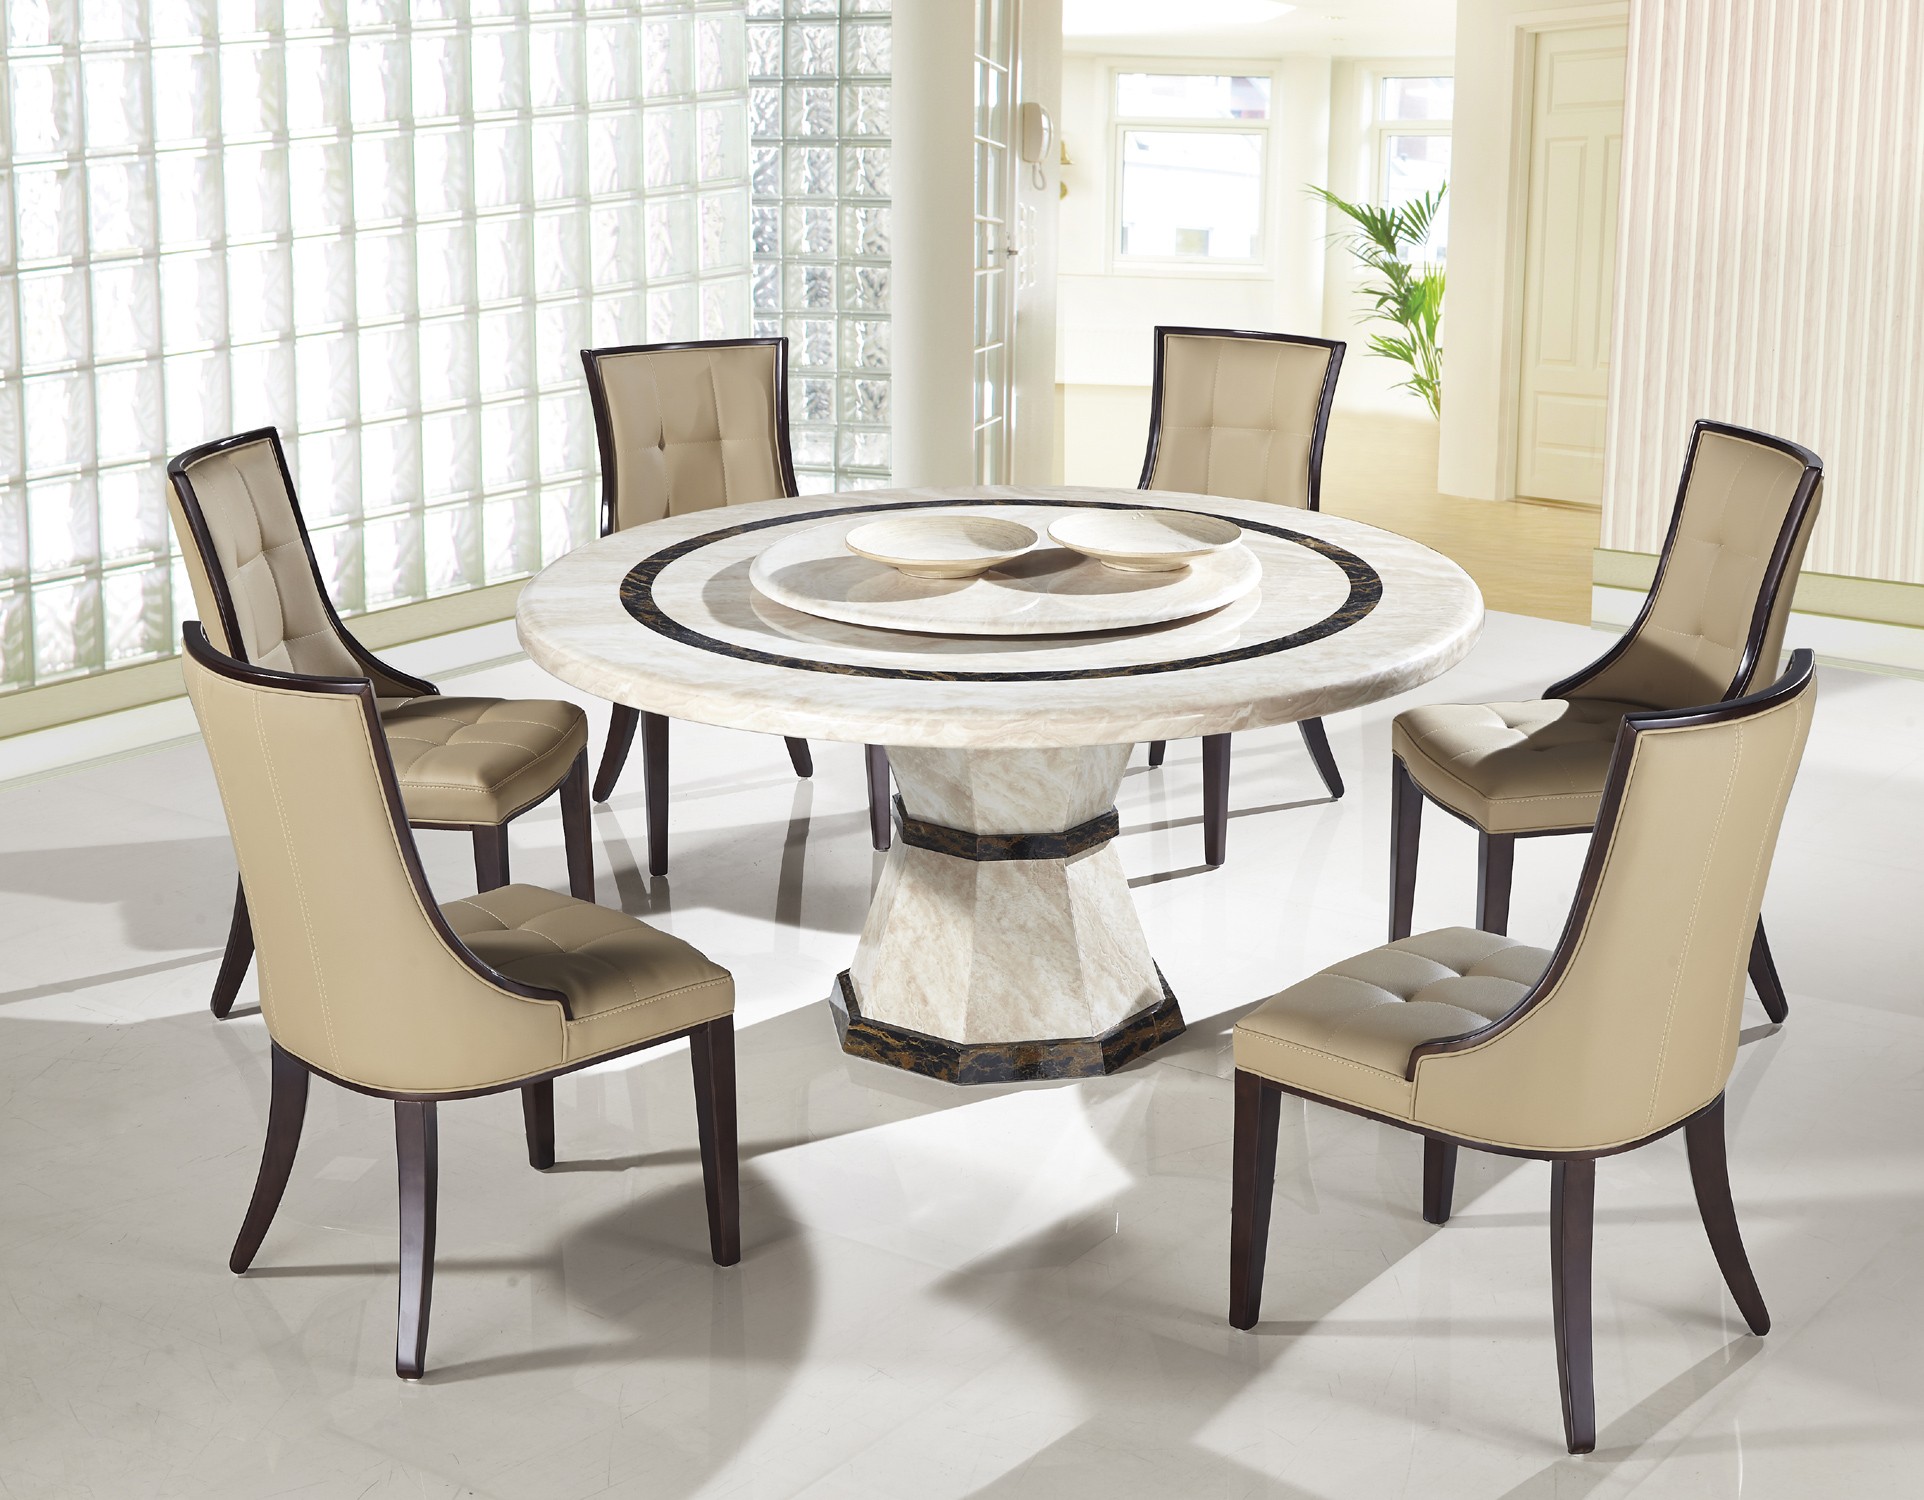 Modern Round Dining Set Shop For Affordable Home Furniture Decor